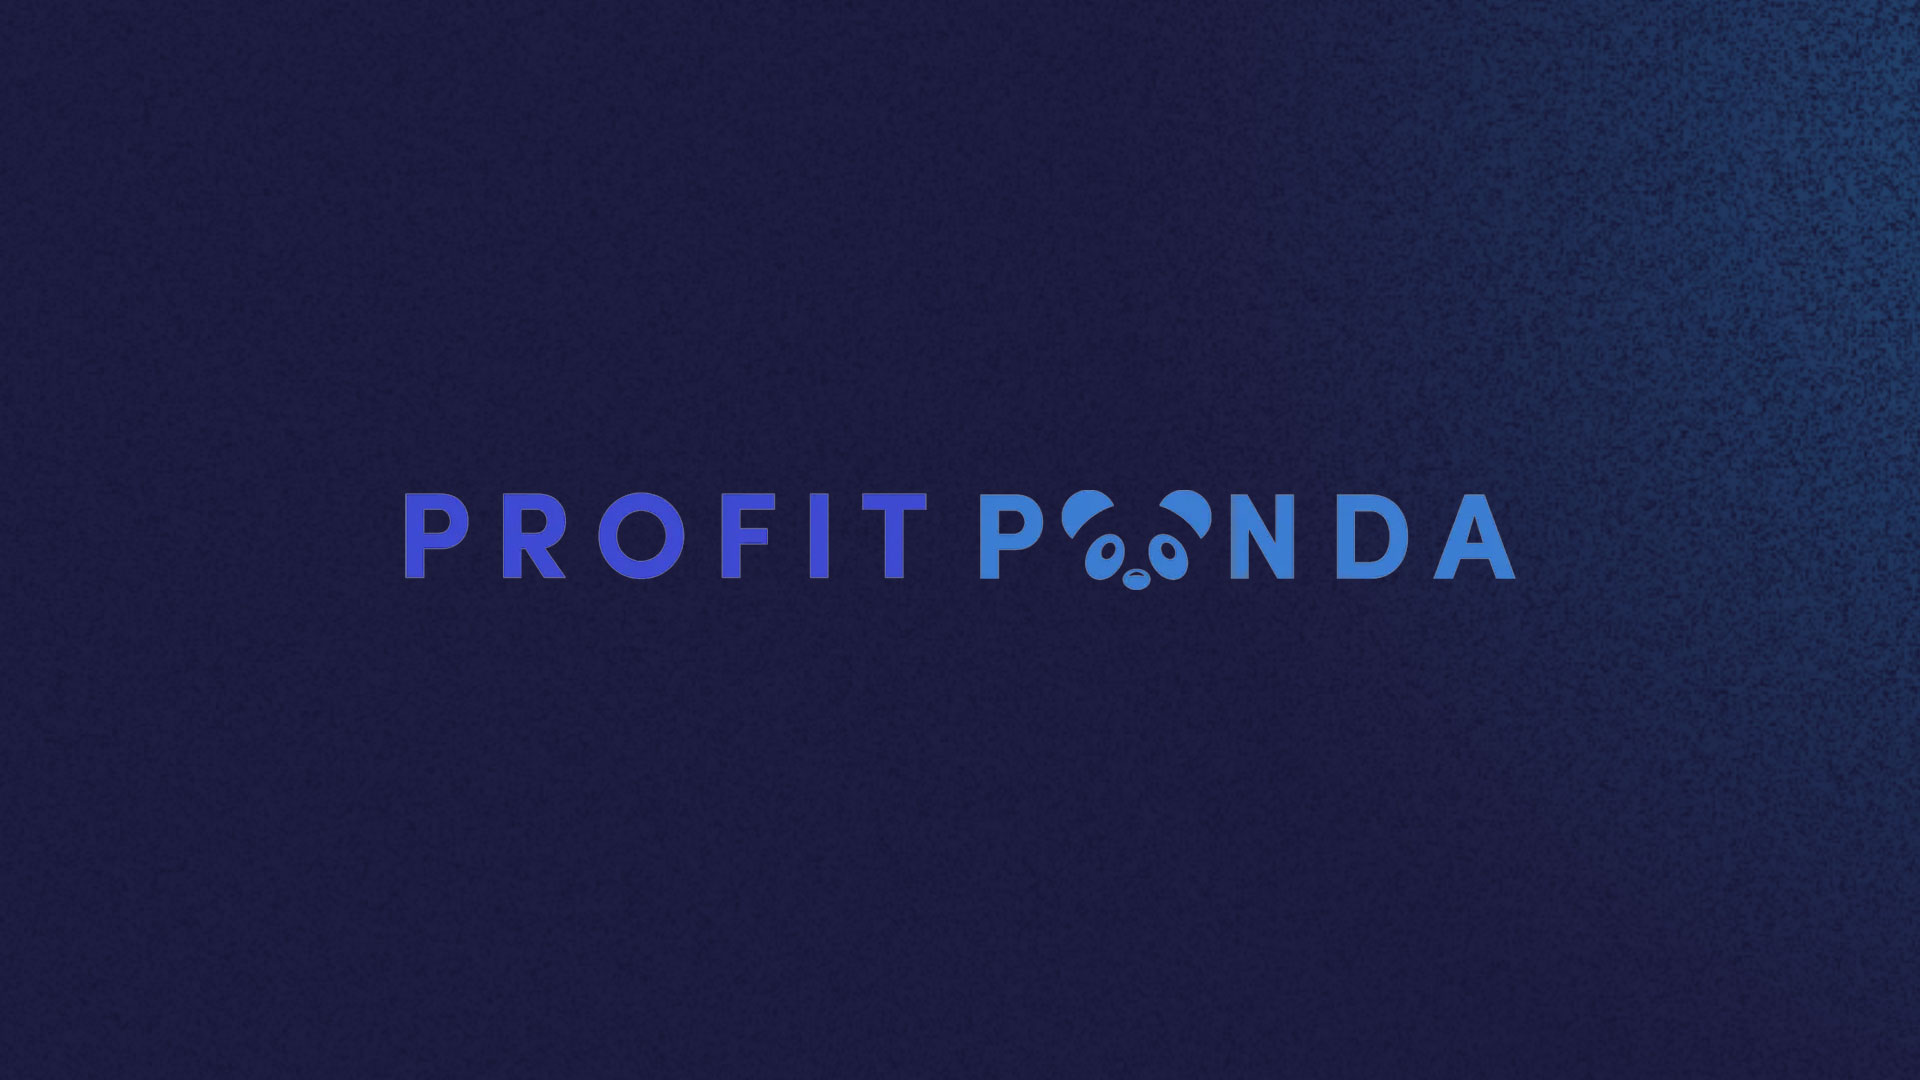 ProfitPanda CFO